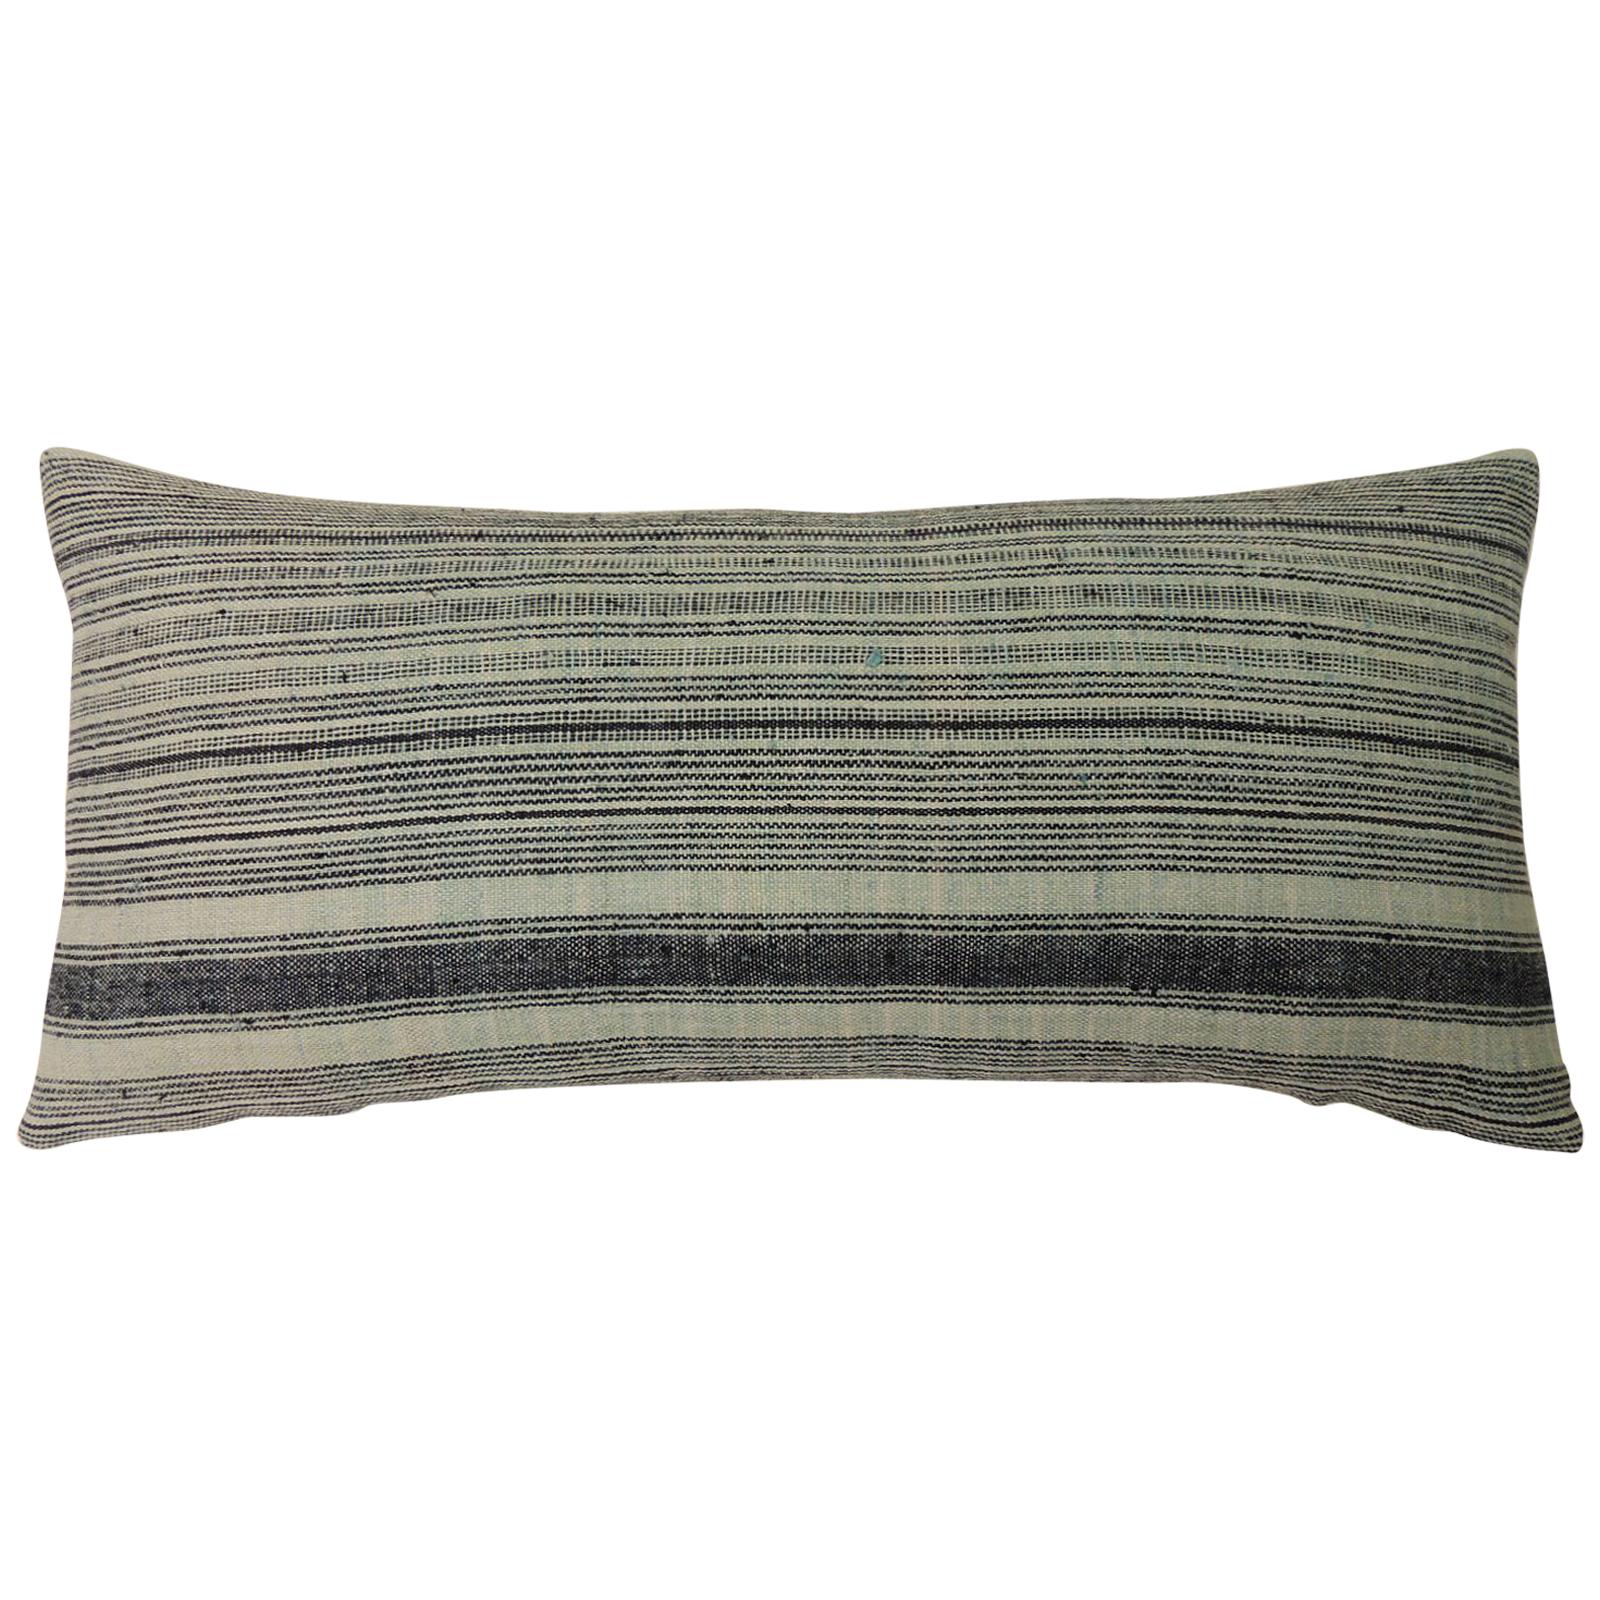 Asian Green and Black Woven "Melati" Stripes Decorative Bolster Pillow